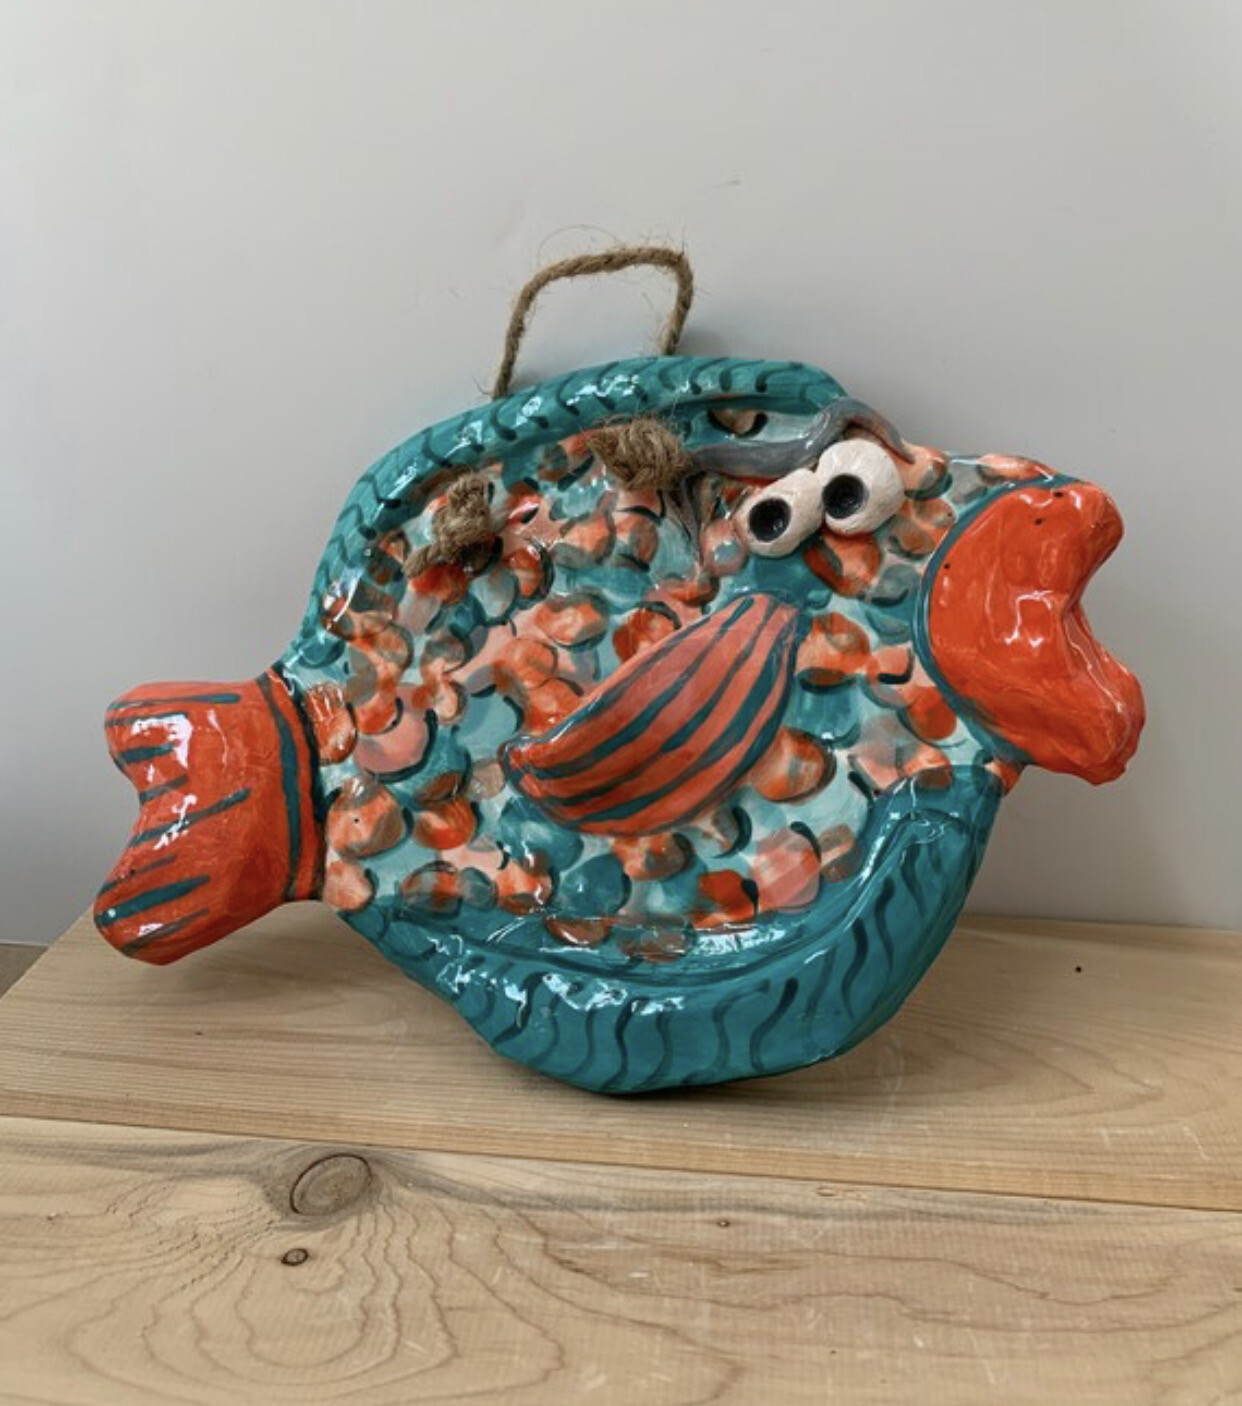 Handmade Pottery - Colorful Blue and Coral Clay Fish Plaque Wall Art - Handmade Ceramic Sculpture - Ocean Nautical Beach Coastal Decor, Handpainted